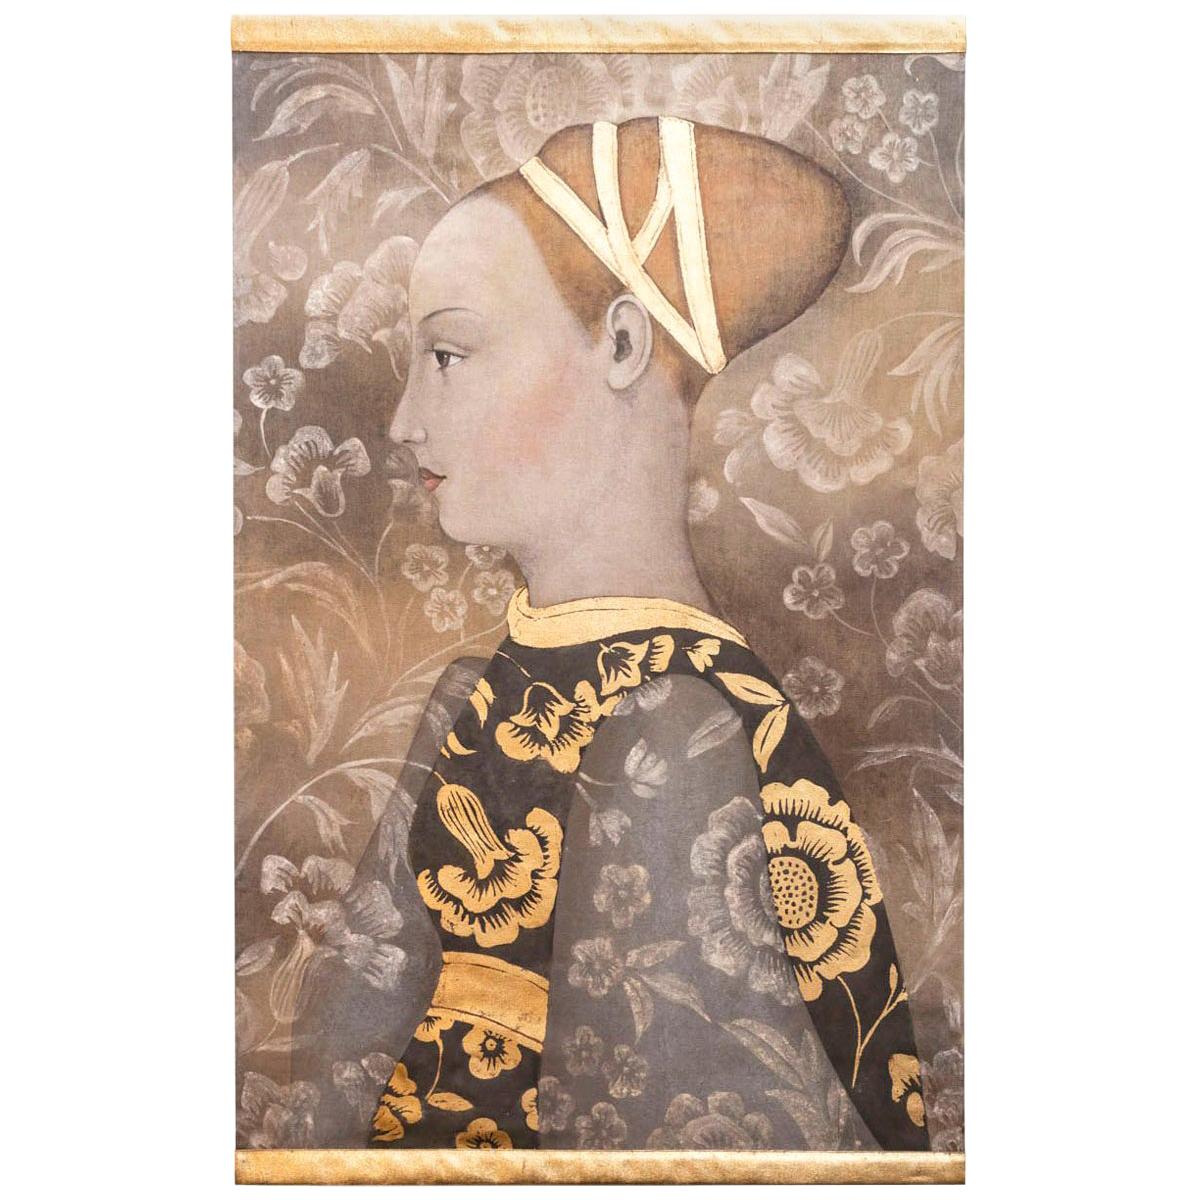 Painted Canvas of a Renaissance Style Woman Portrait, Contemporary Work For Sale